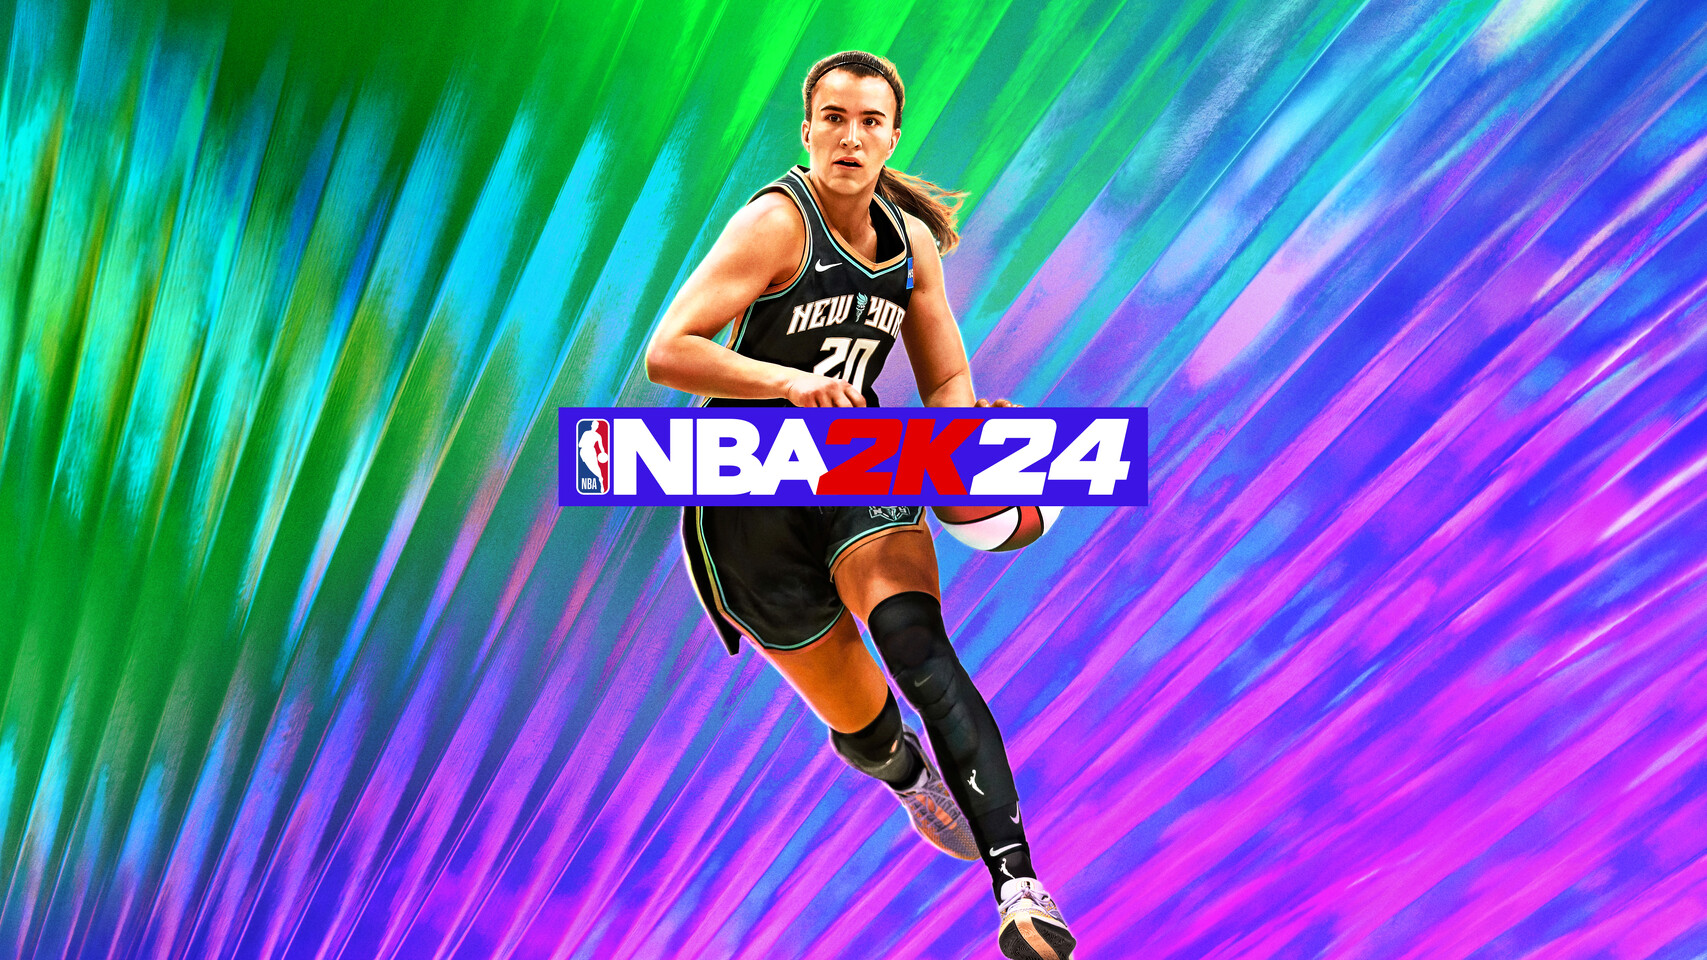 NBA 2K24 Celebrates the Legendary Kobe Bryant as This Year's Cover Athlete -